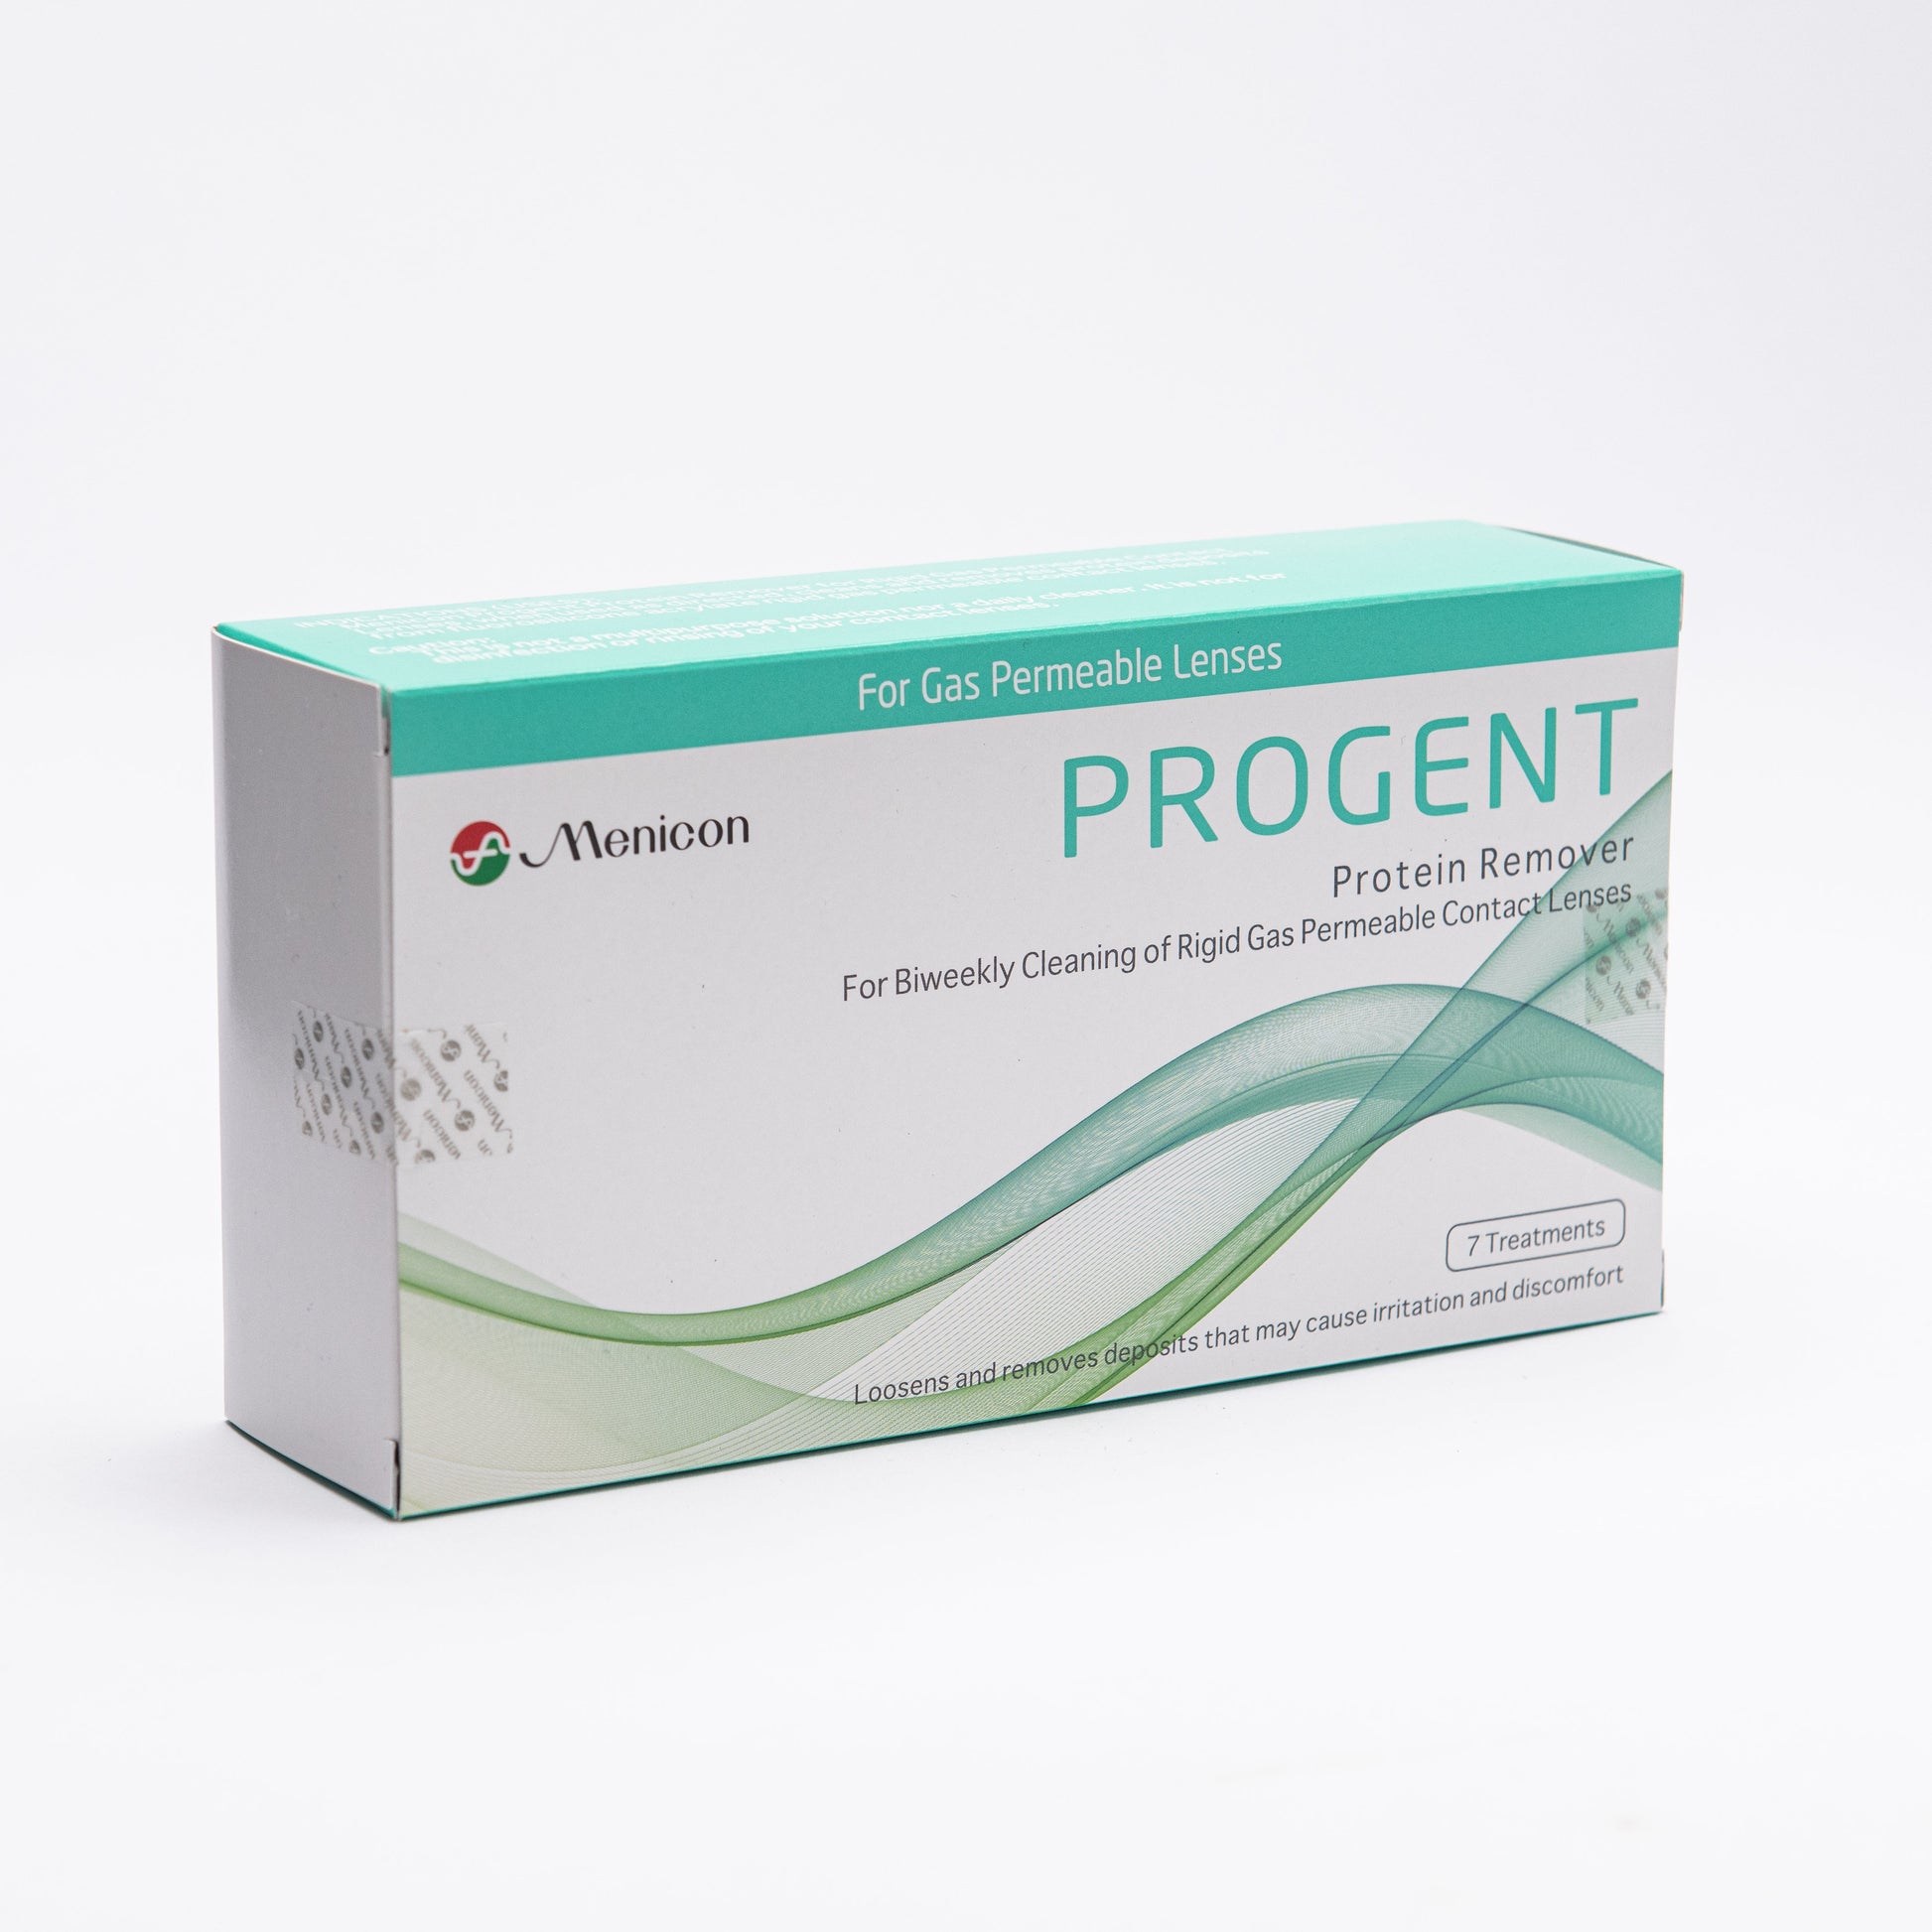 Progent protein remover 7 treatments box